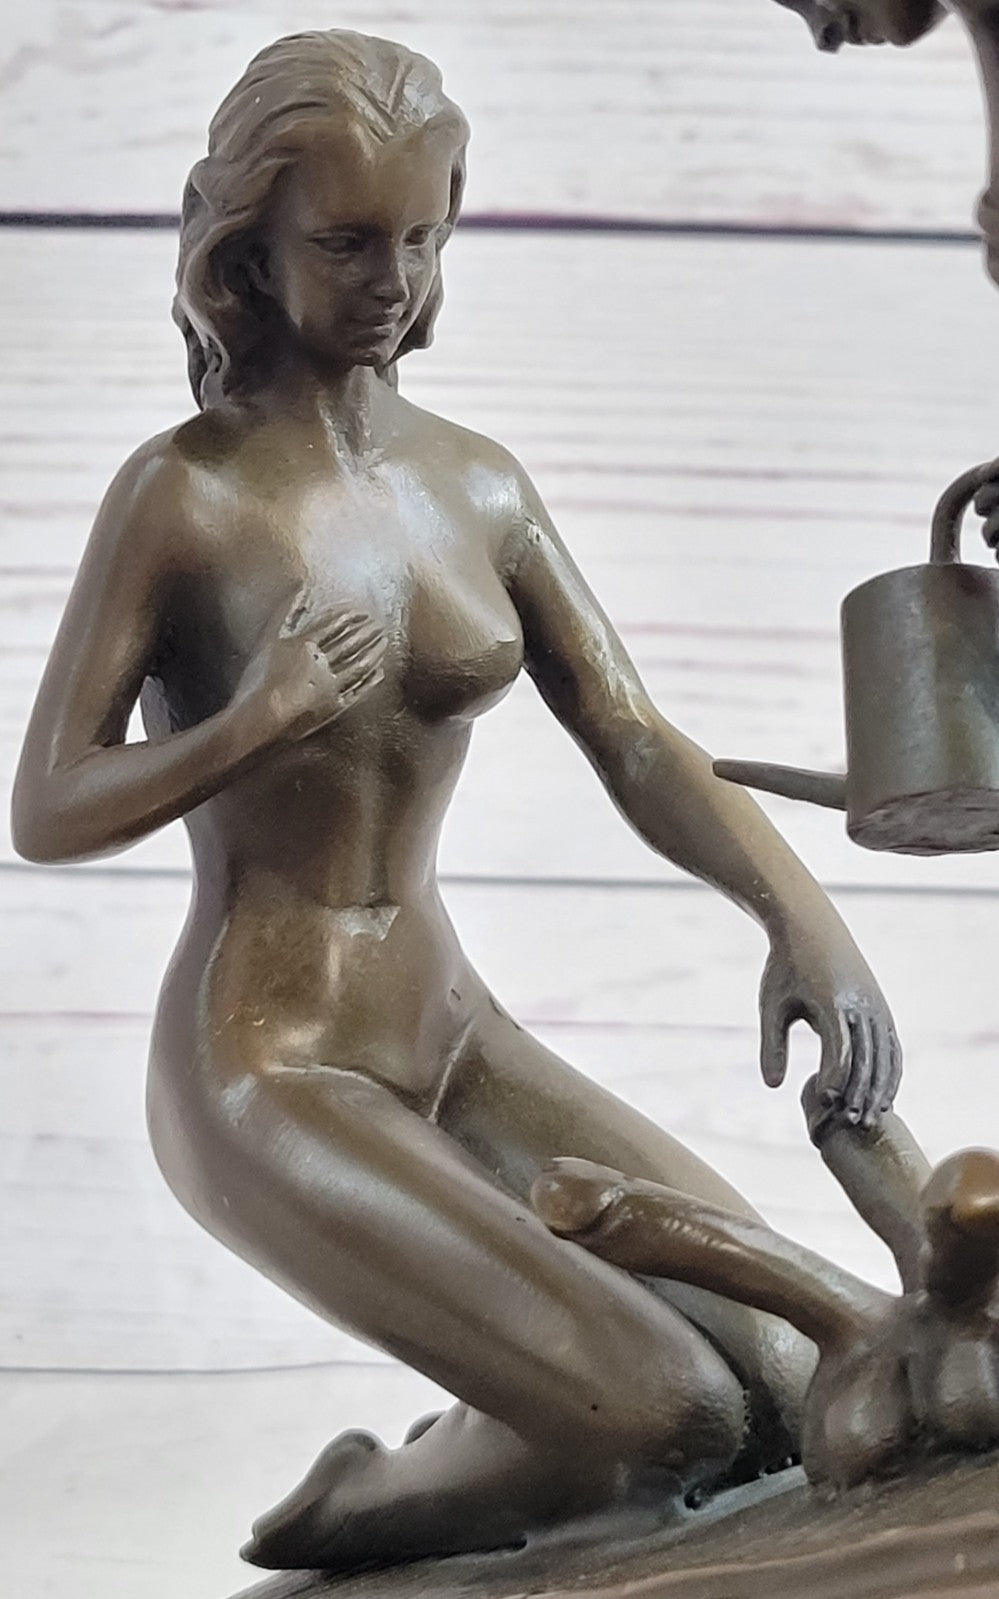 Provocative Bronze Artwork: Sensuous Nude Girl Tending to Growing Erotic Plant Statue